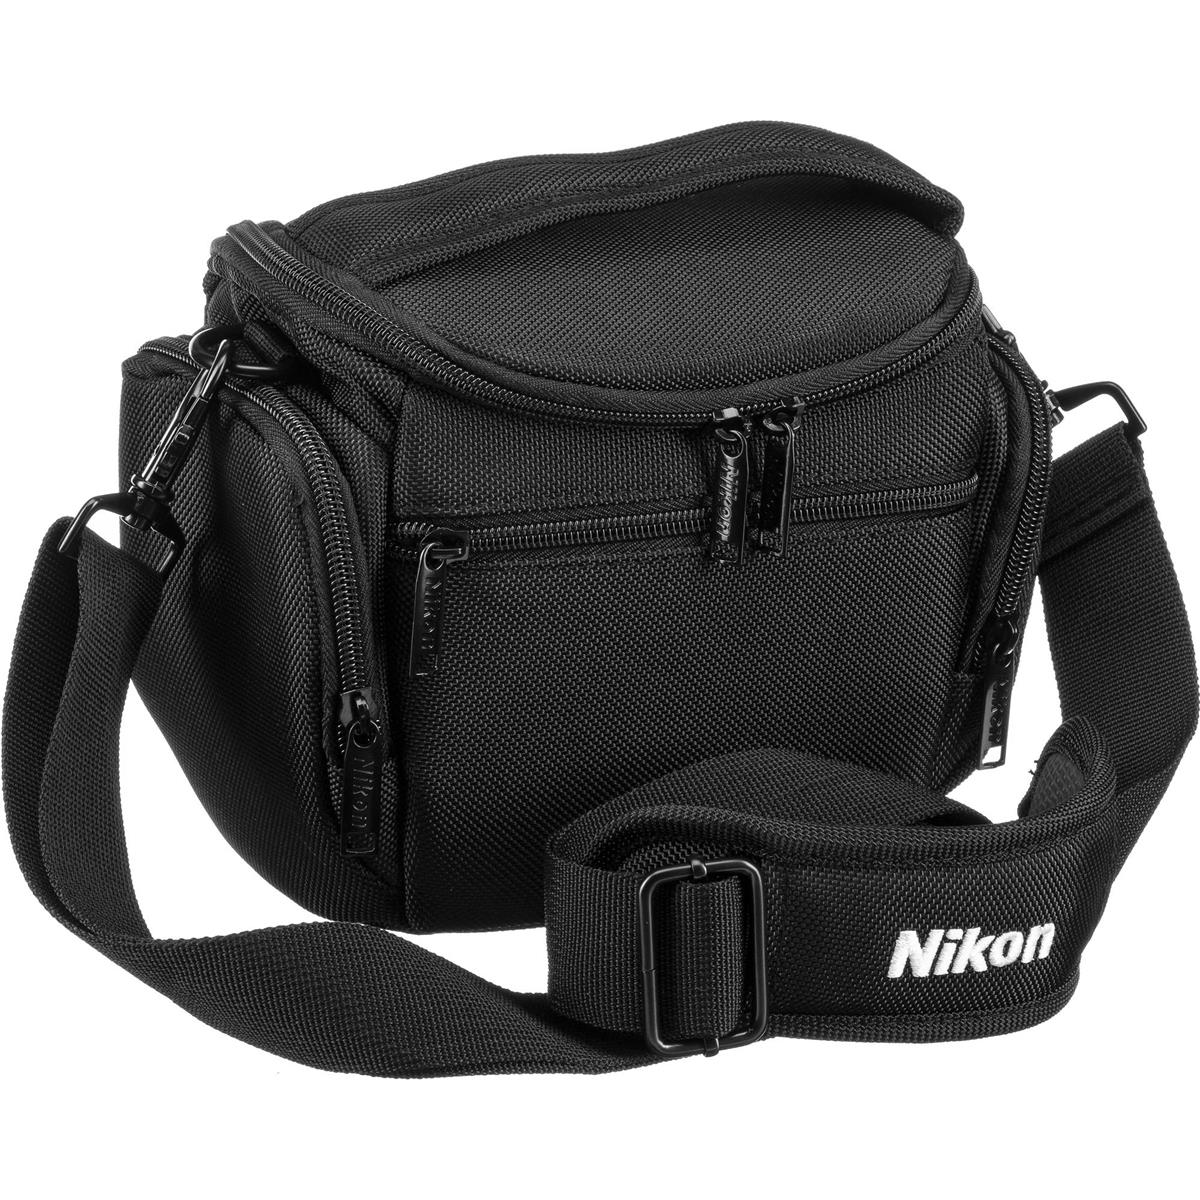 Image of Nikon Camera Case for Nikon 1 J5 and Coolpix P900 Cameras